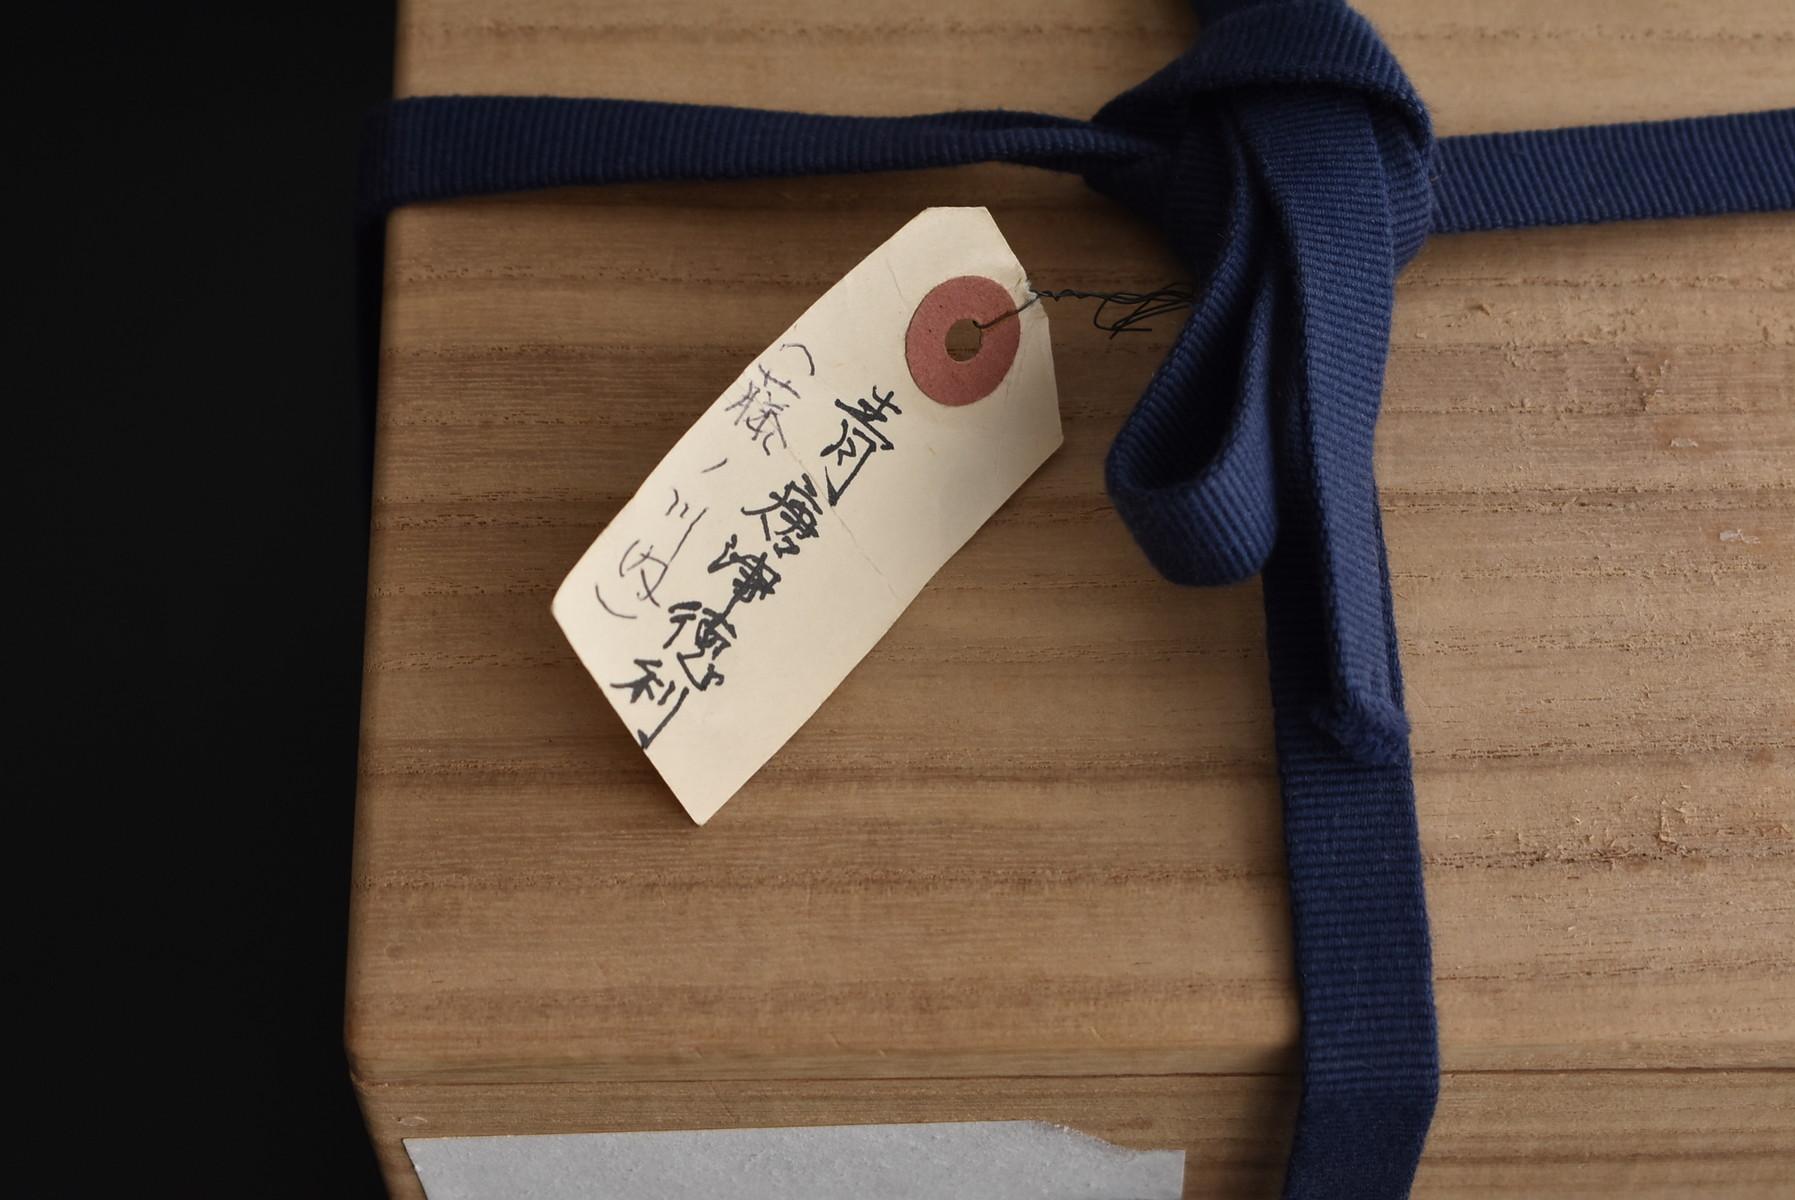 Edo Period '1600s' Japanese Sake Bottle 